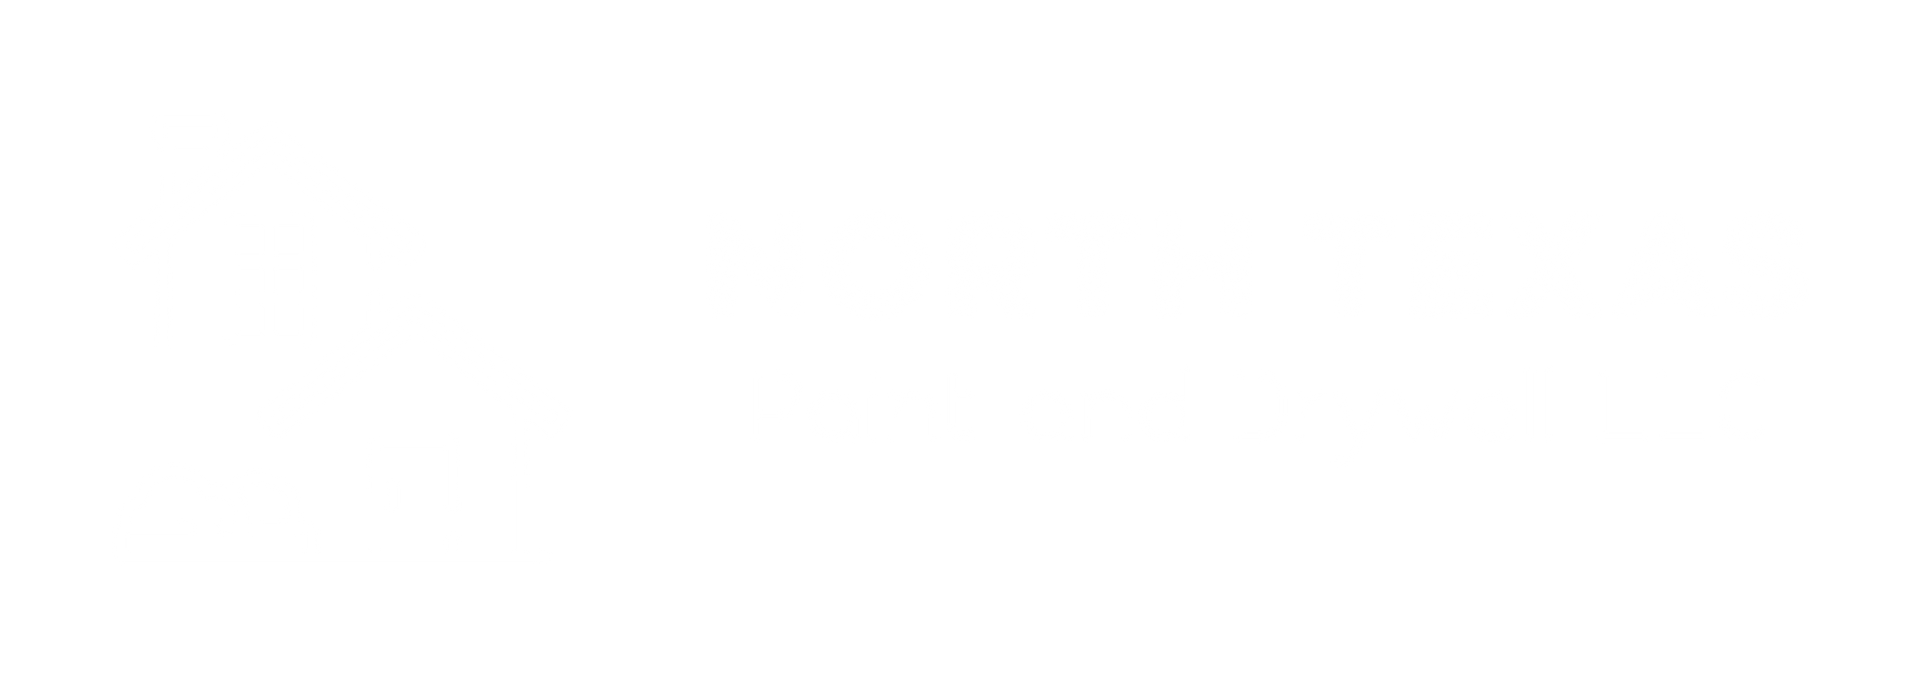 North Texas Paint and Drywall LLC Logo